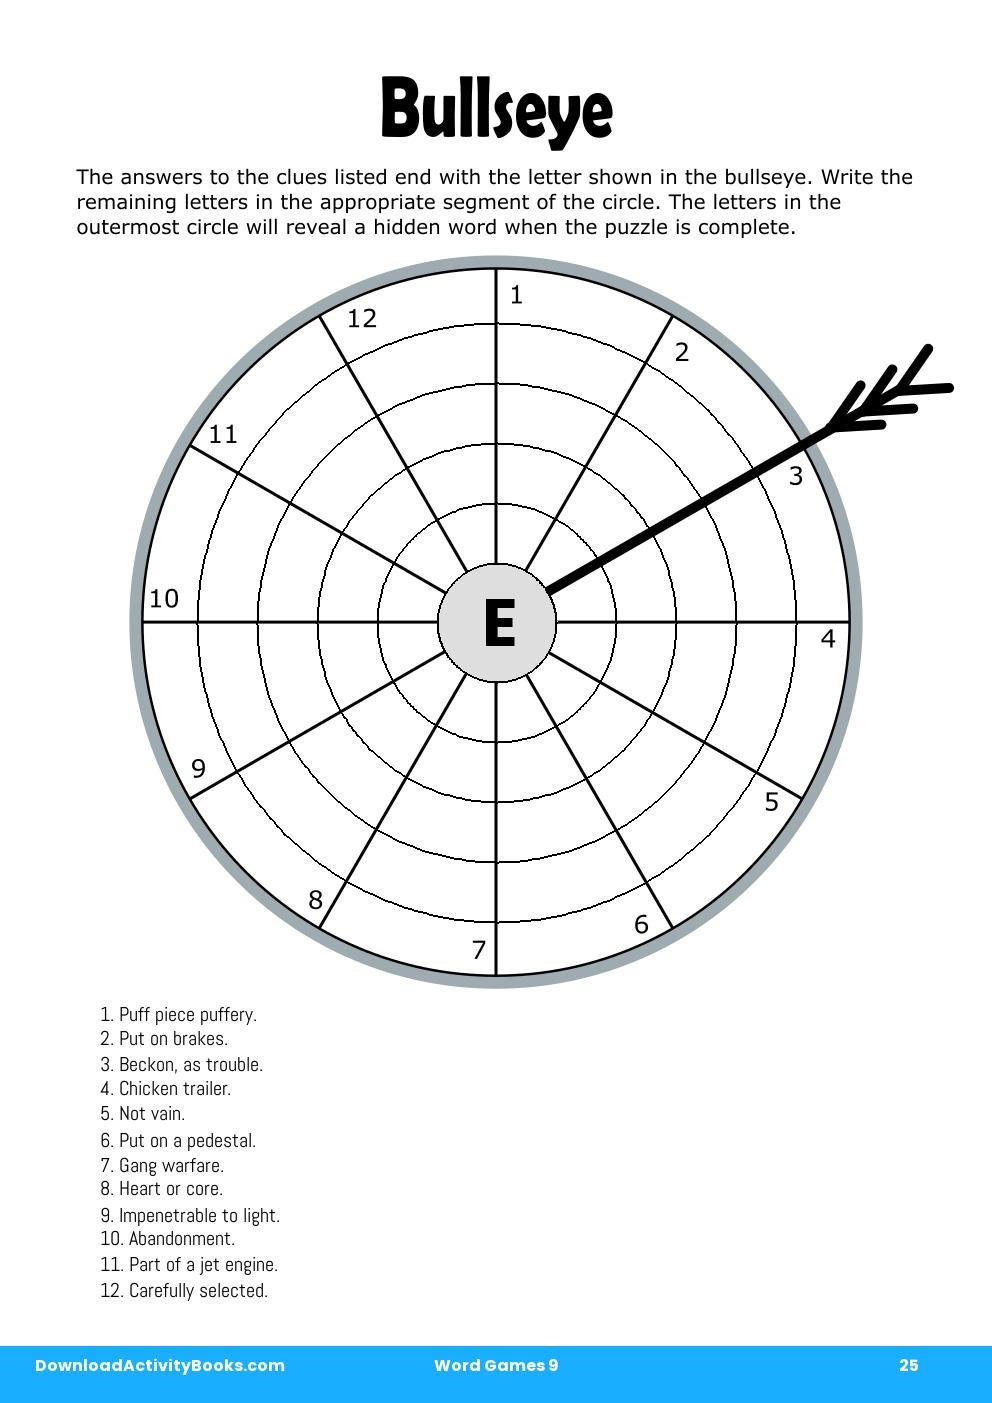 Bullseye in Word Games 9